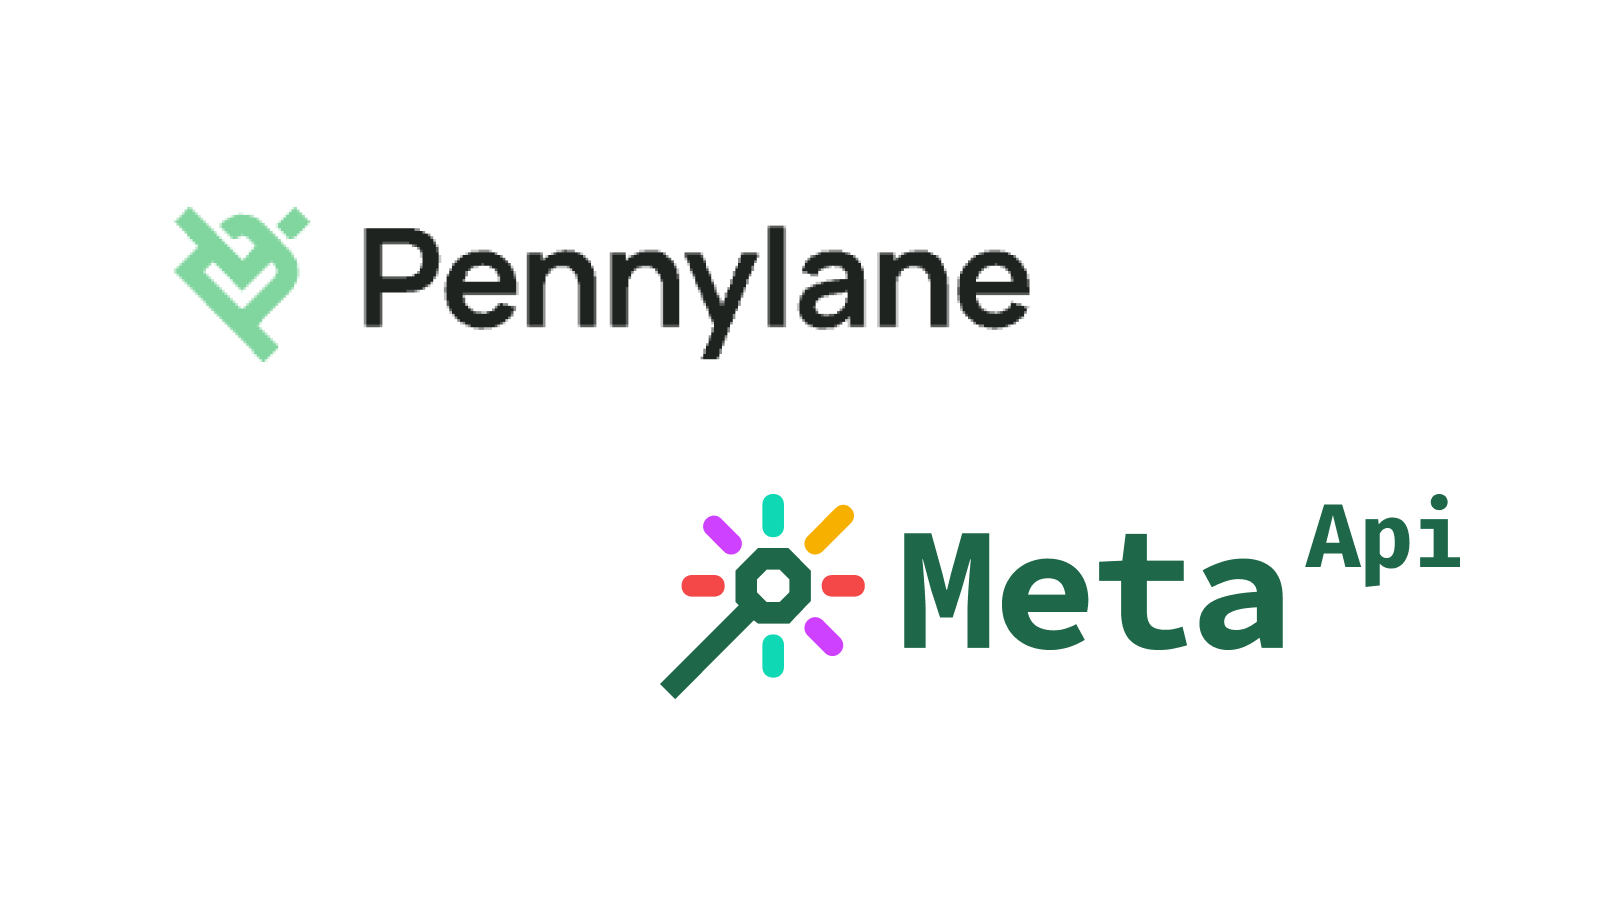 Pennylane and Meta API logo